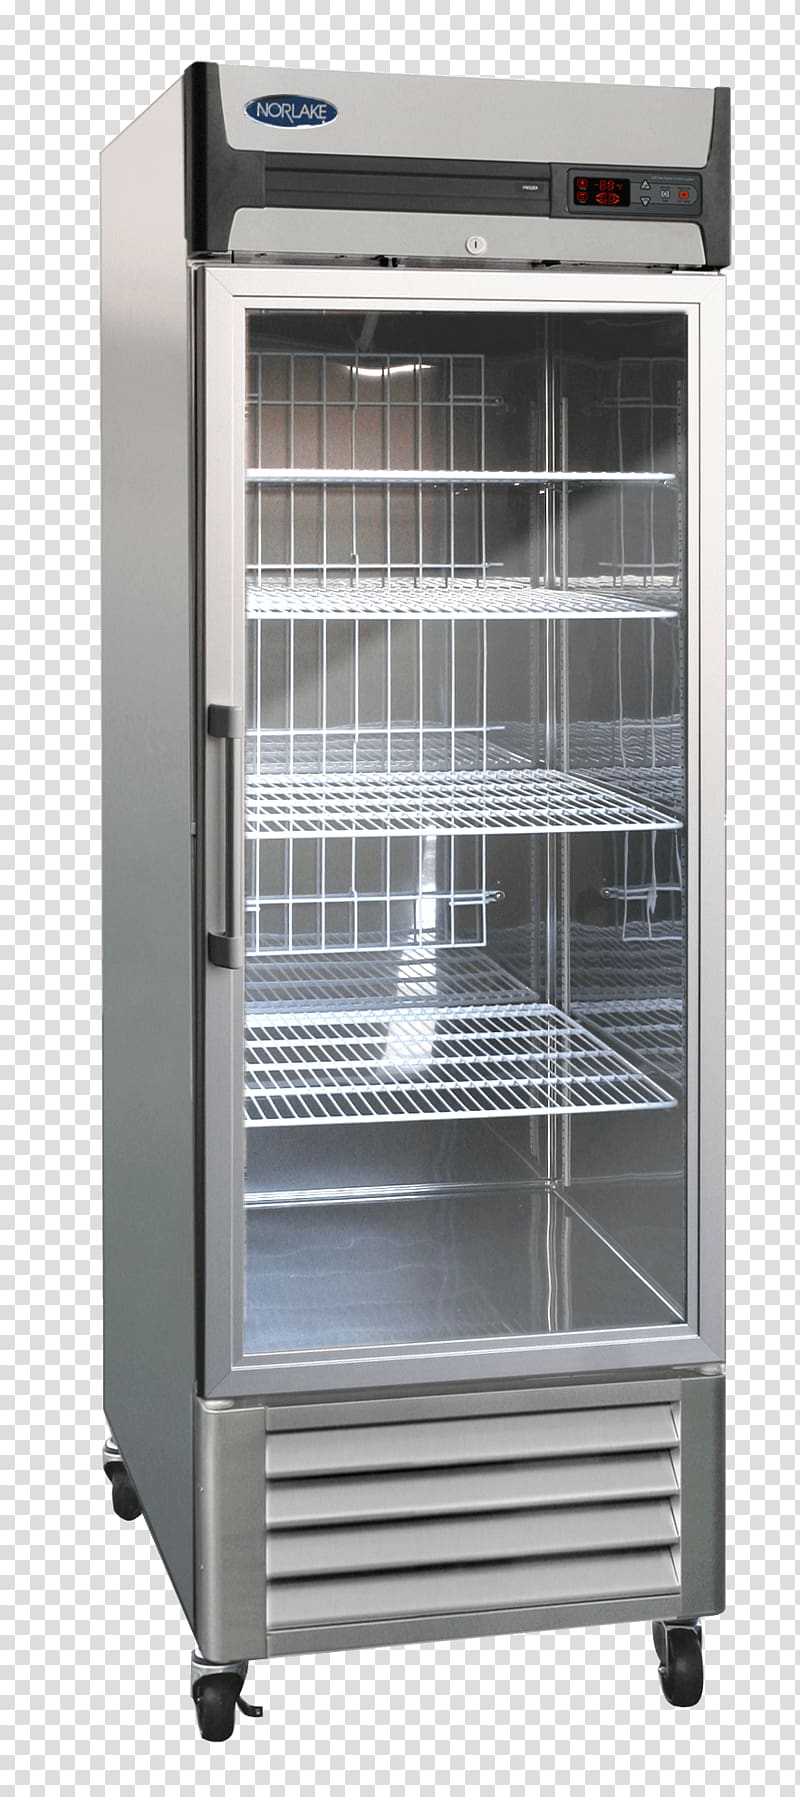 Refrigerator Home appliance Freezers Refrigeration Defrosting, refrigerator transparent background PNG clipart